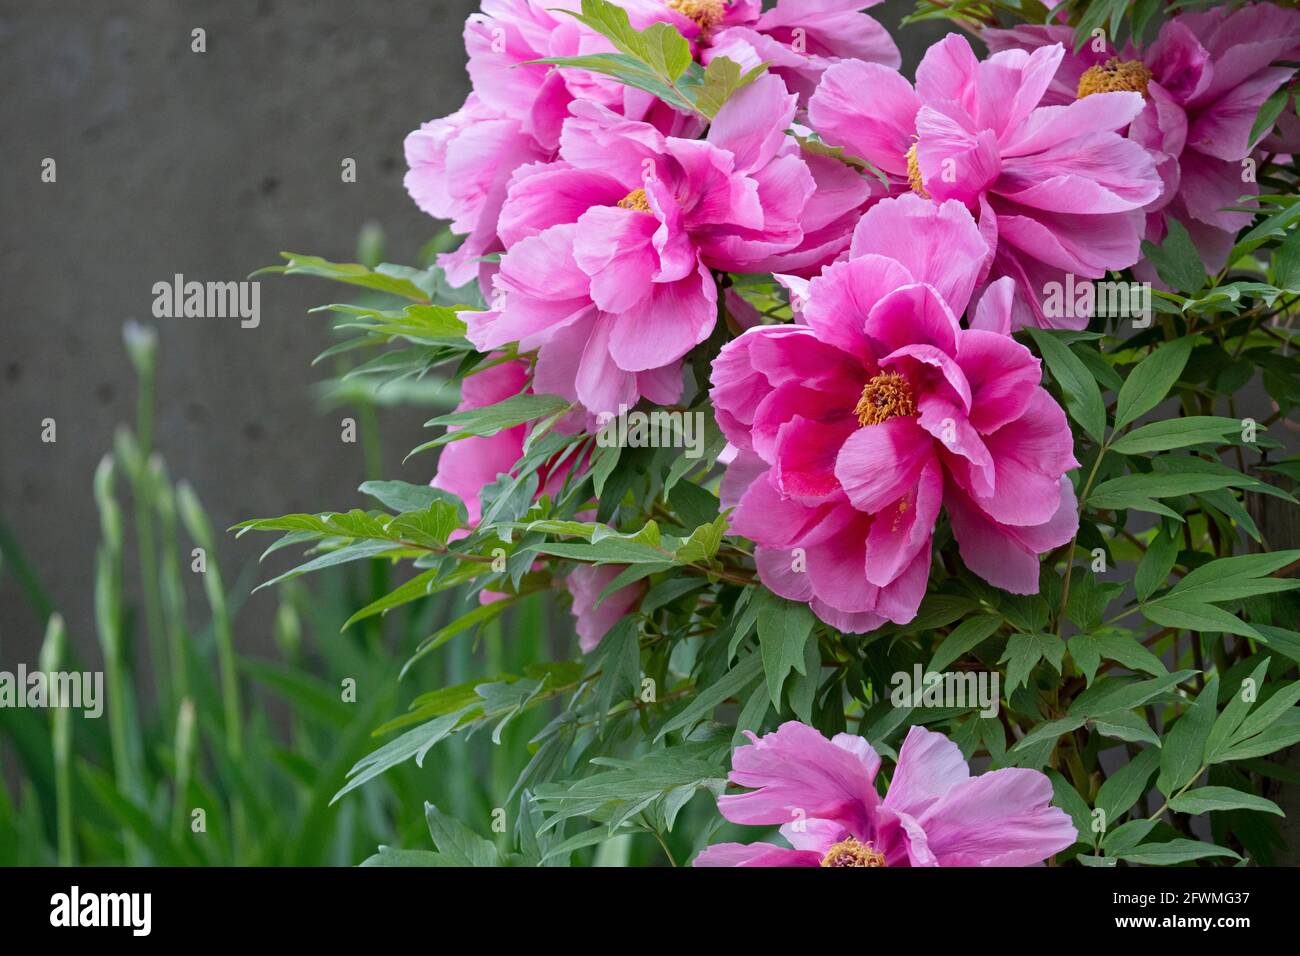 Pink Peonies flowering in late Spring, Garden Perennials, Peony Flowers Stock Photo